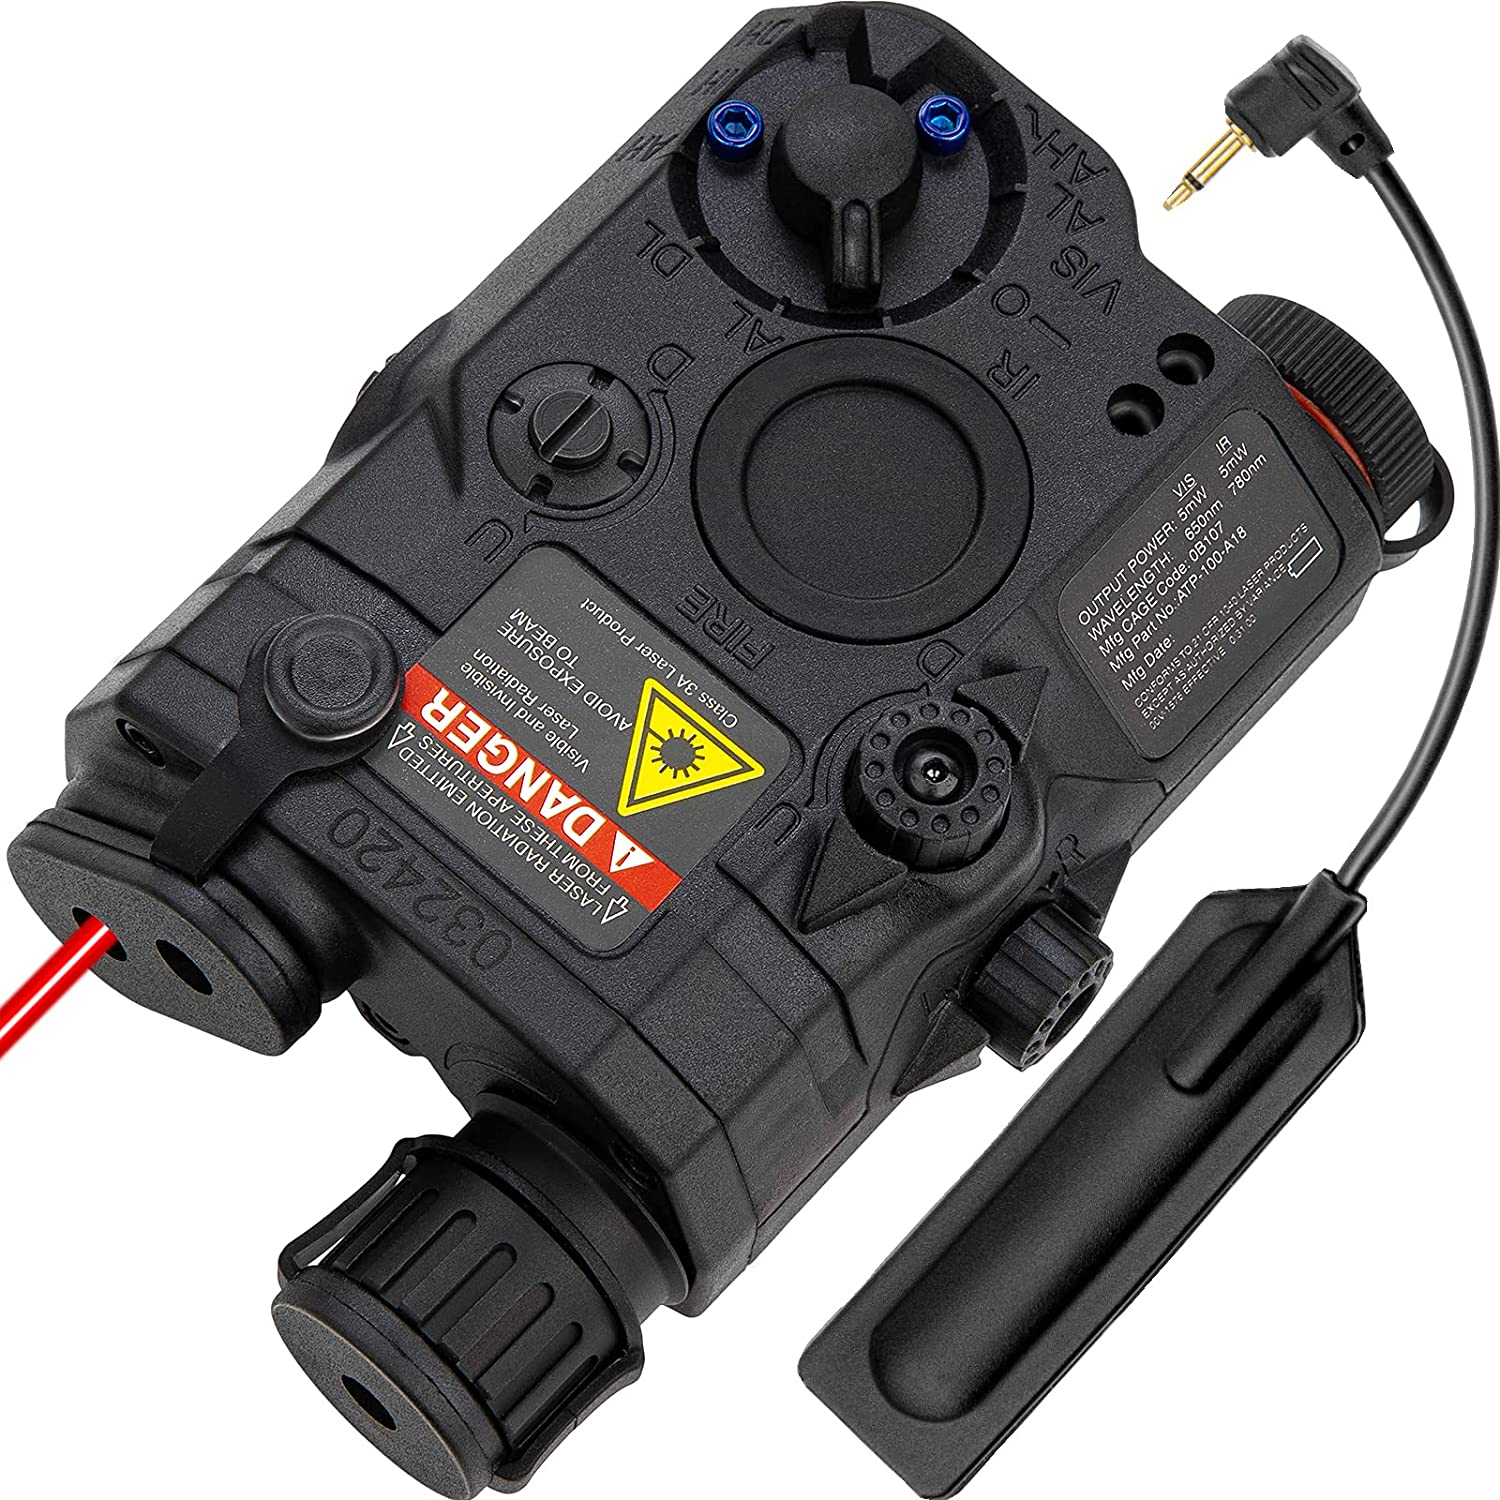 AN PEQ-15 Battery Case Red Dot Laser LED Flashlight